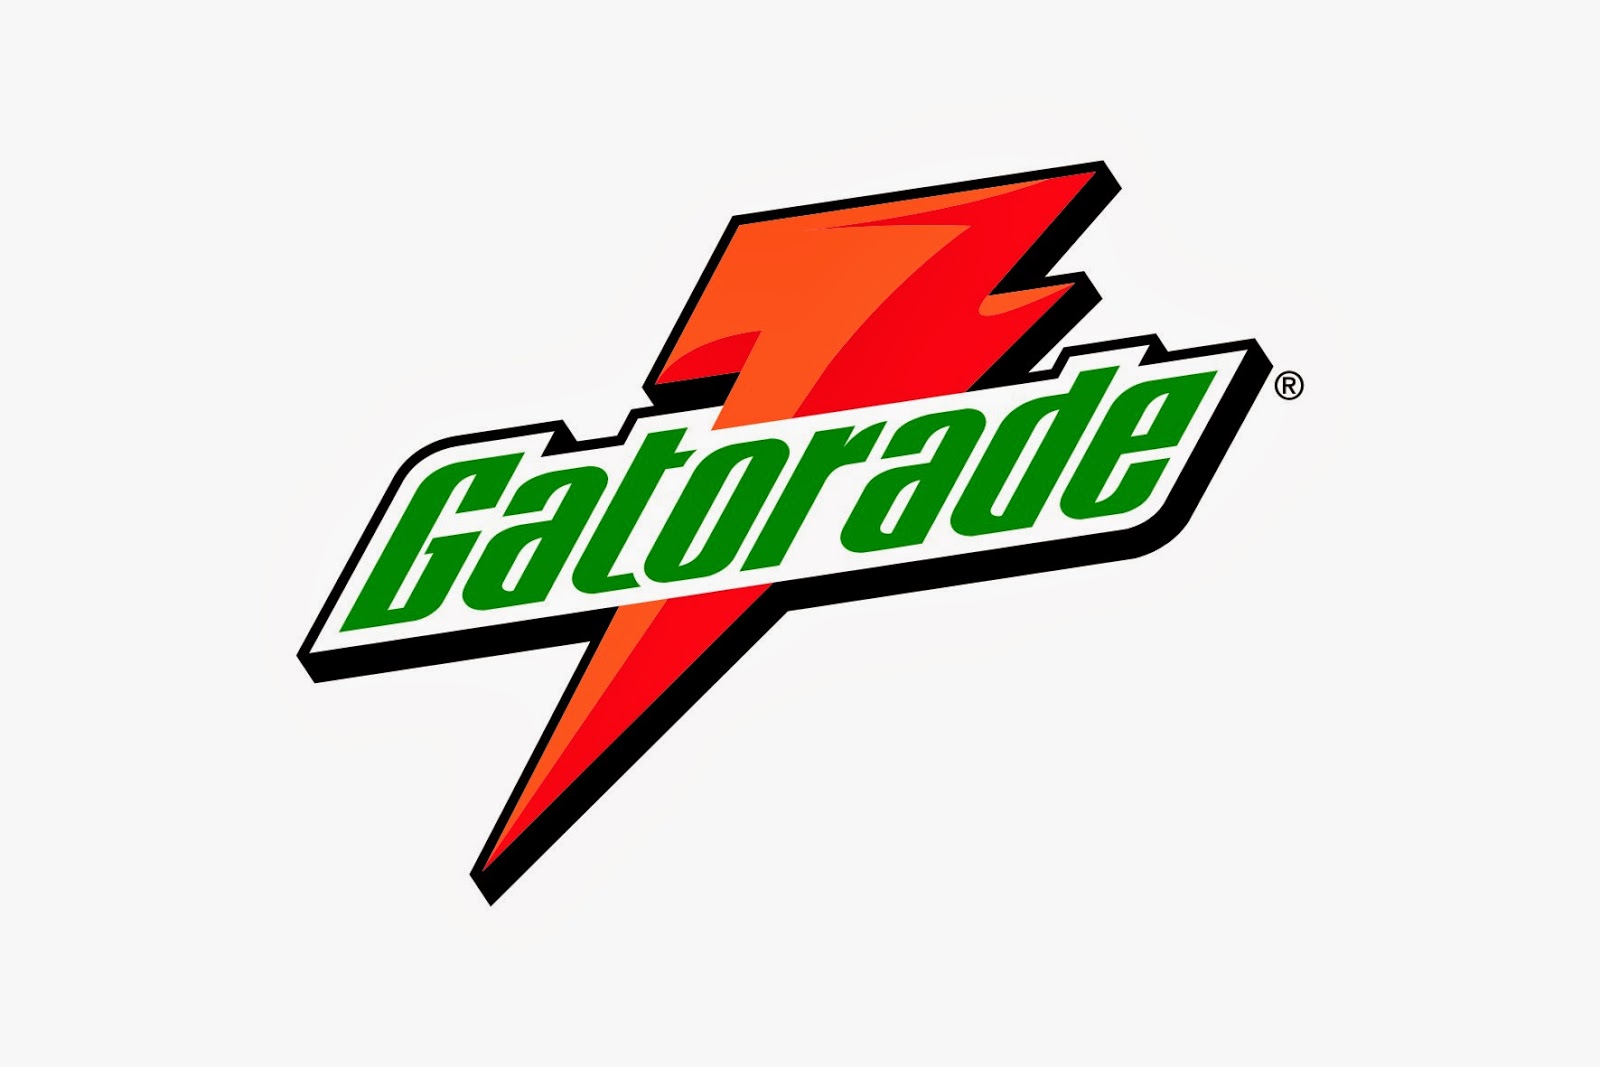 gatorade vector logo download